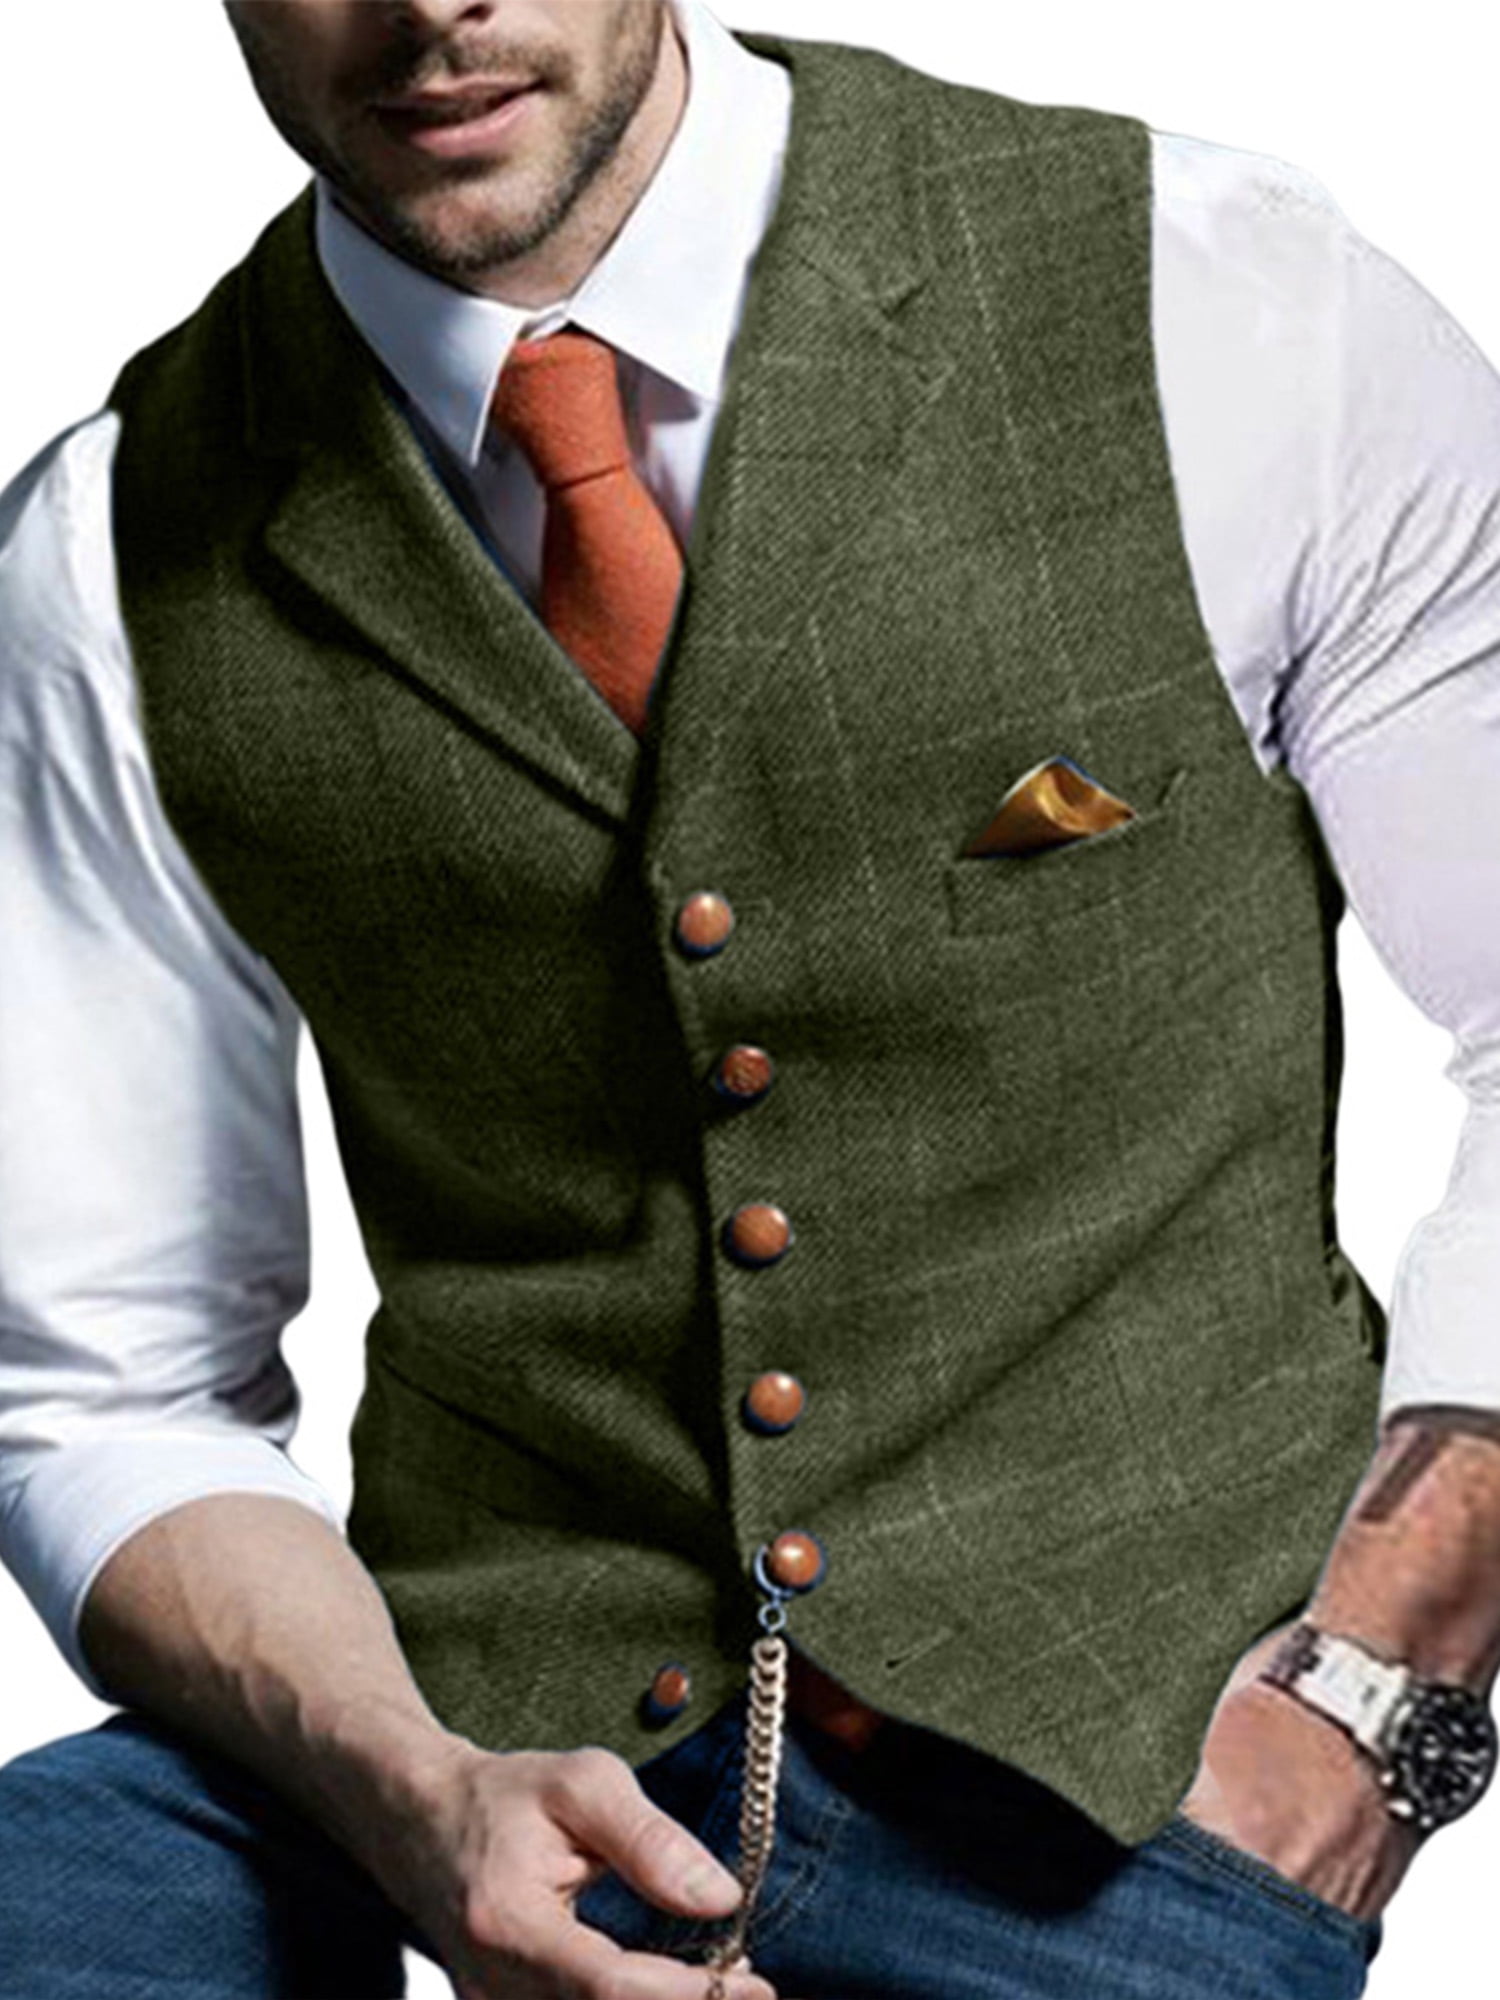 Mens Wool Tweed Waistcoat Casual Wool Herringbone/Tweed Tailored Collar Suit Waistcoat Autumn Winter Formal Business Tuxedo Suit Waistcoat Vest Jacket Top Coat